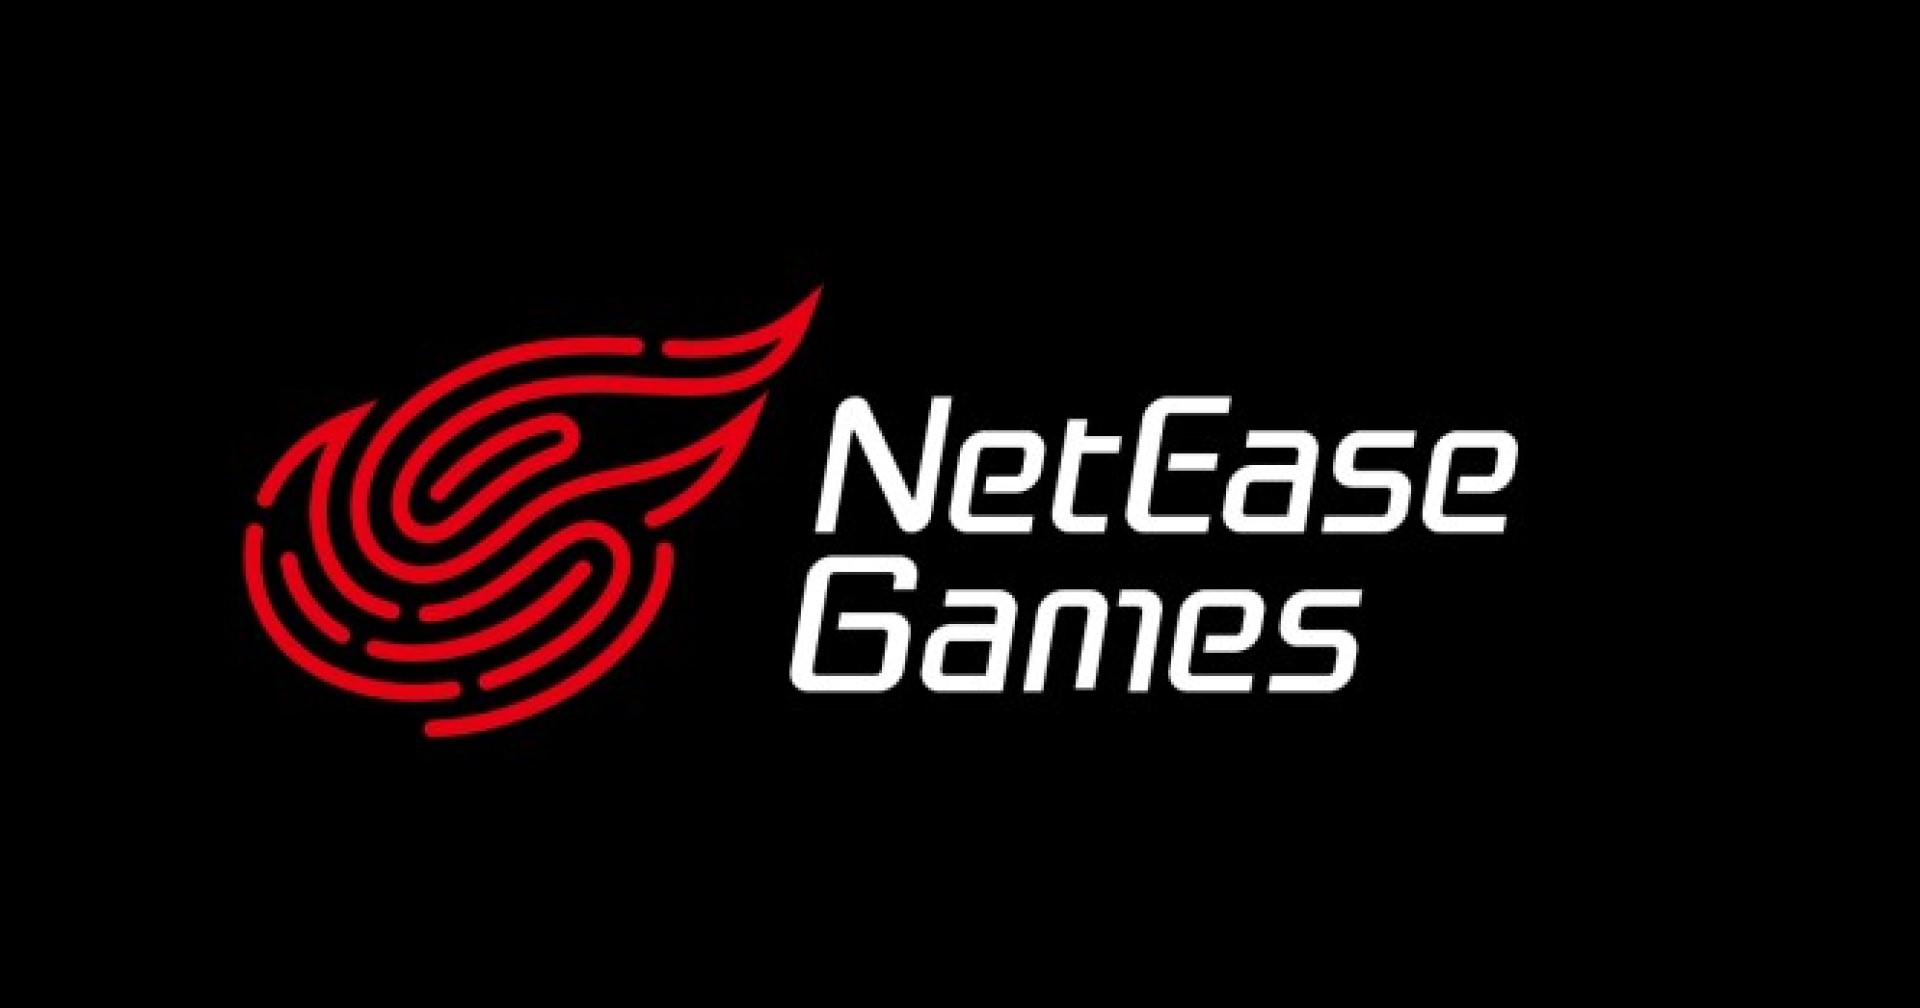 NetEase Games เปิดสตูดิโอเกมแห่งแรกในสหรัฐฯ ในชื่อ Jackalope Games